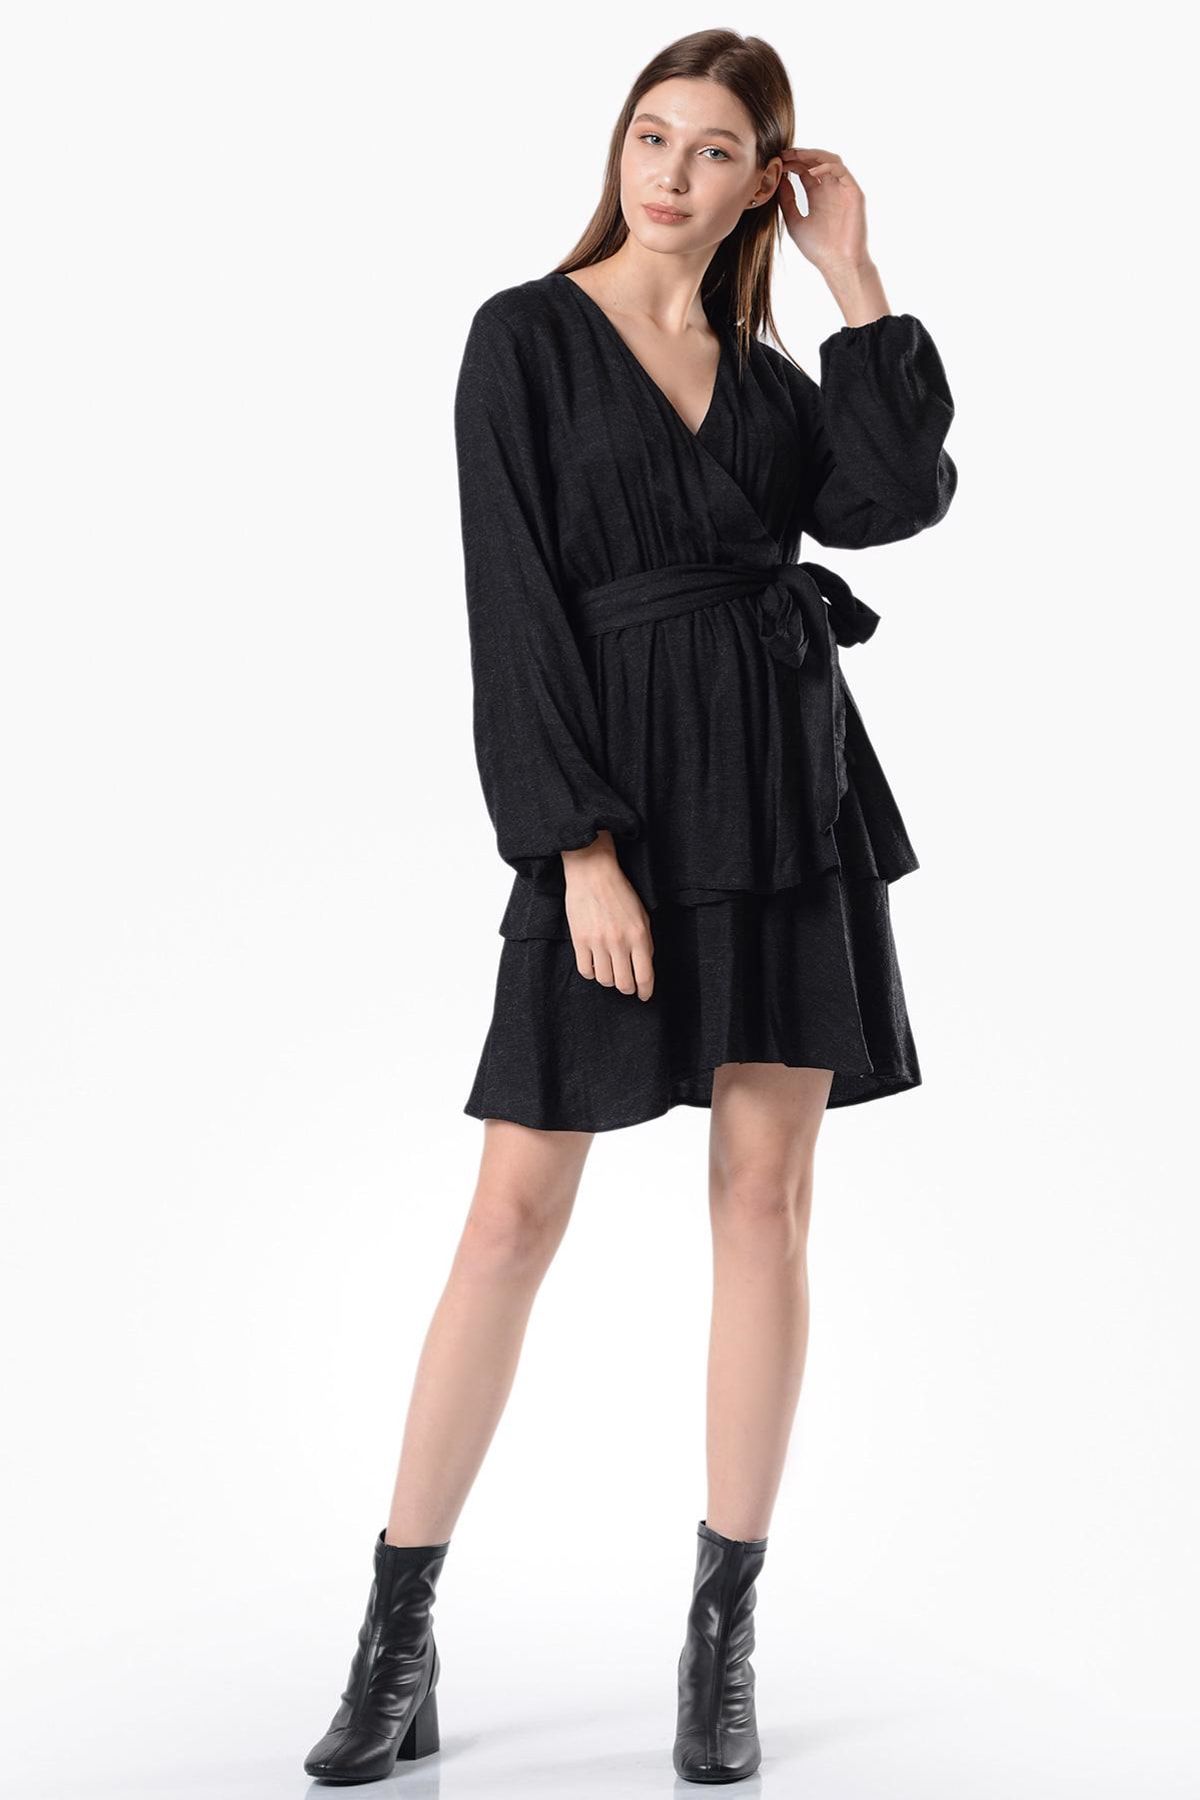 İroni Kadın Siyah Kruvaze Mini Elbise 5312-1335AZ